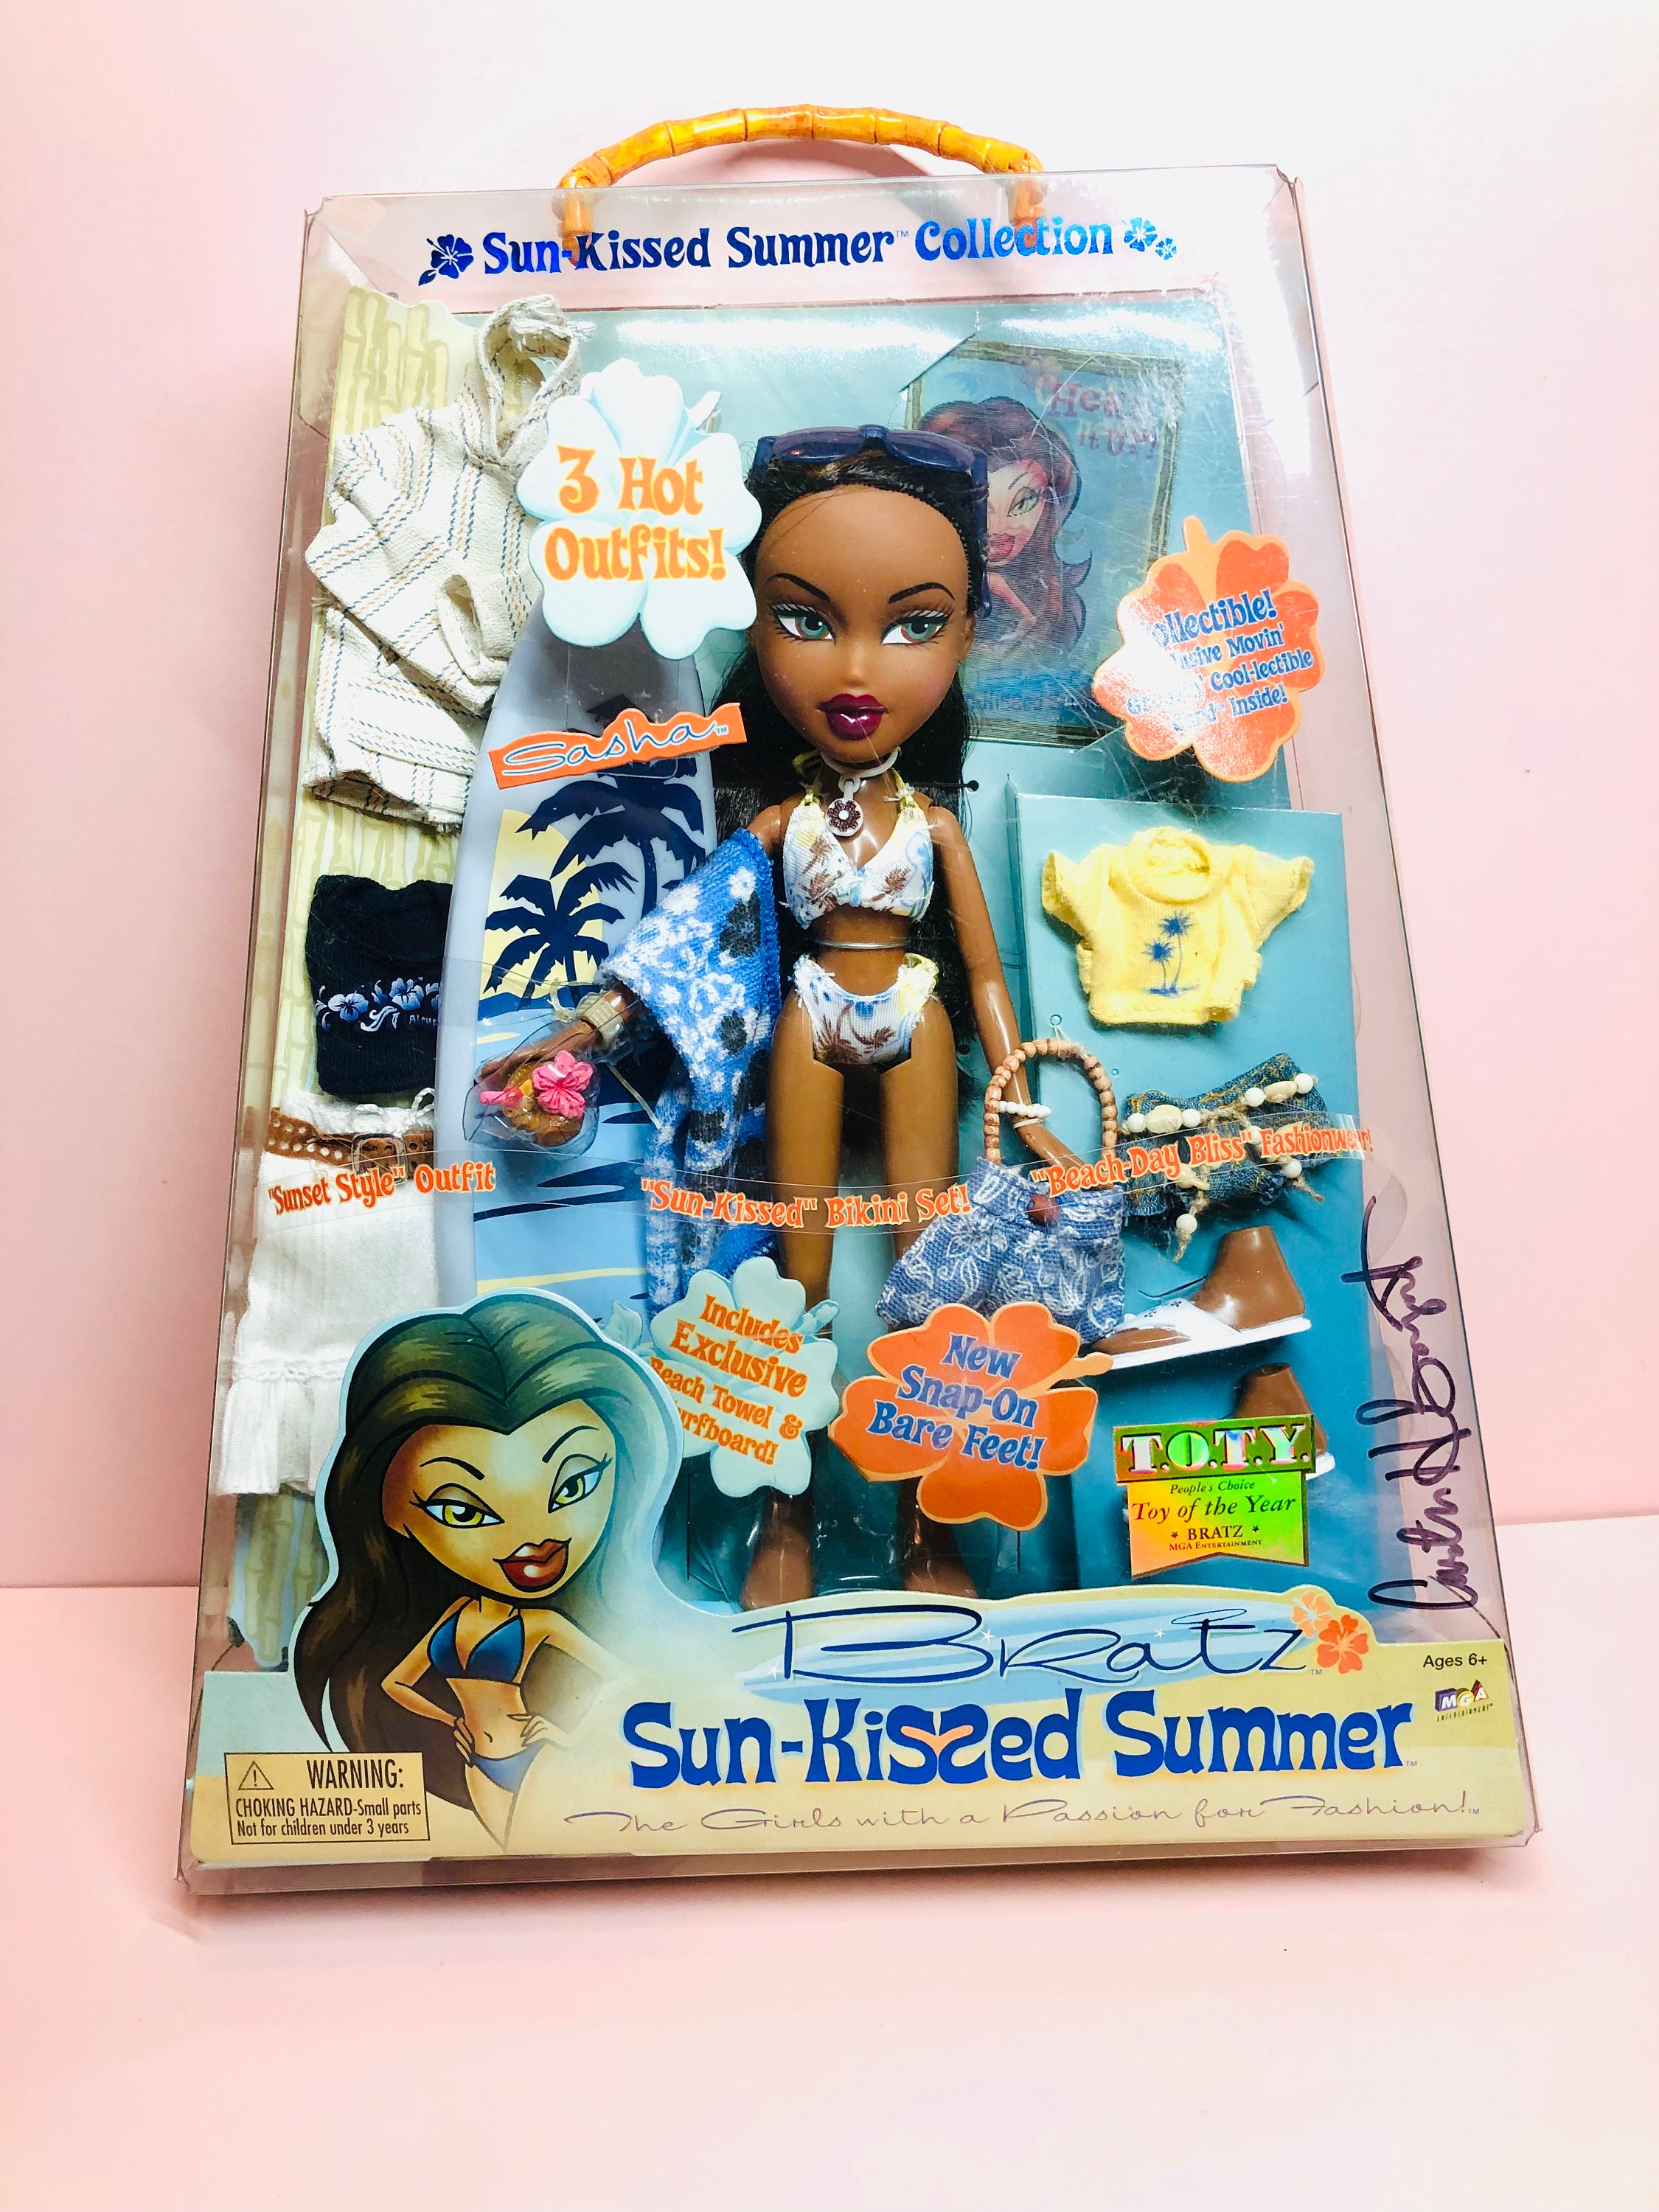 Bratz Sunkissed Summer Sasha Original 2004 Edition. Autographed by